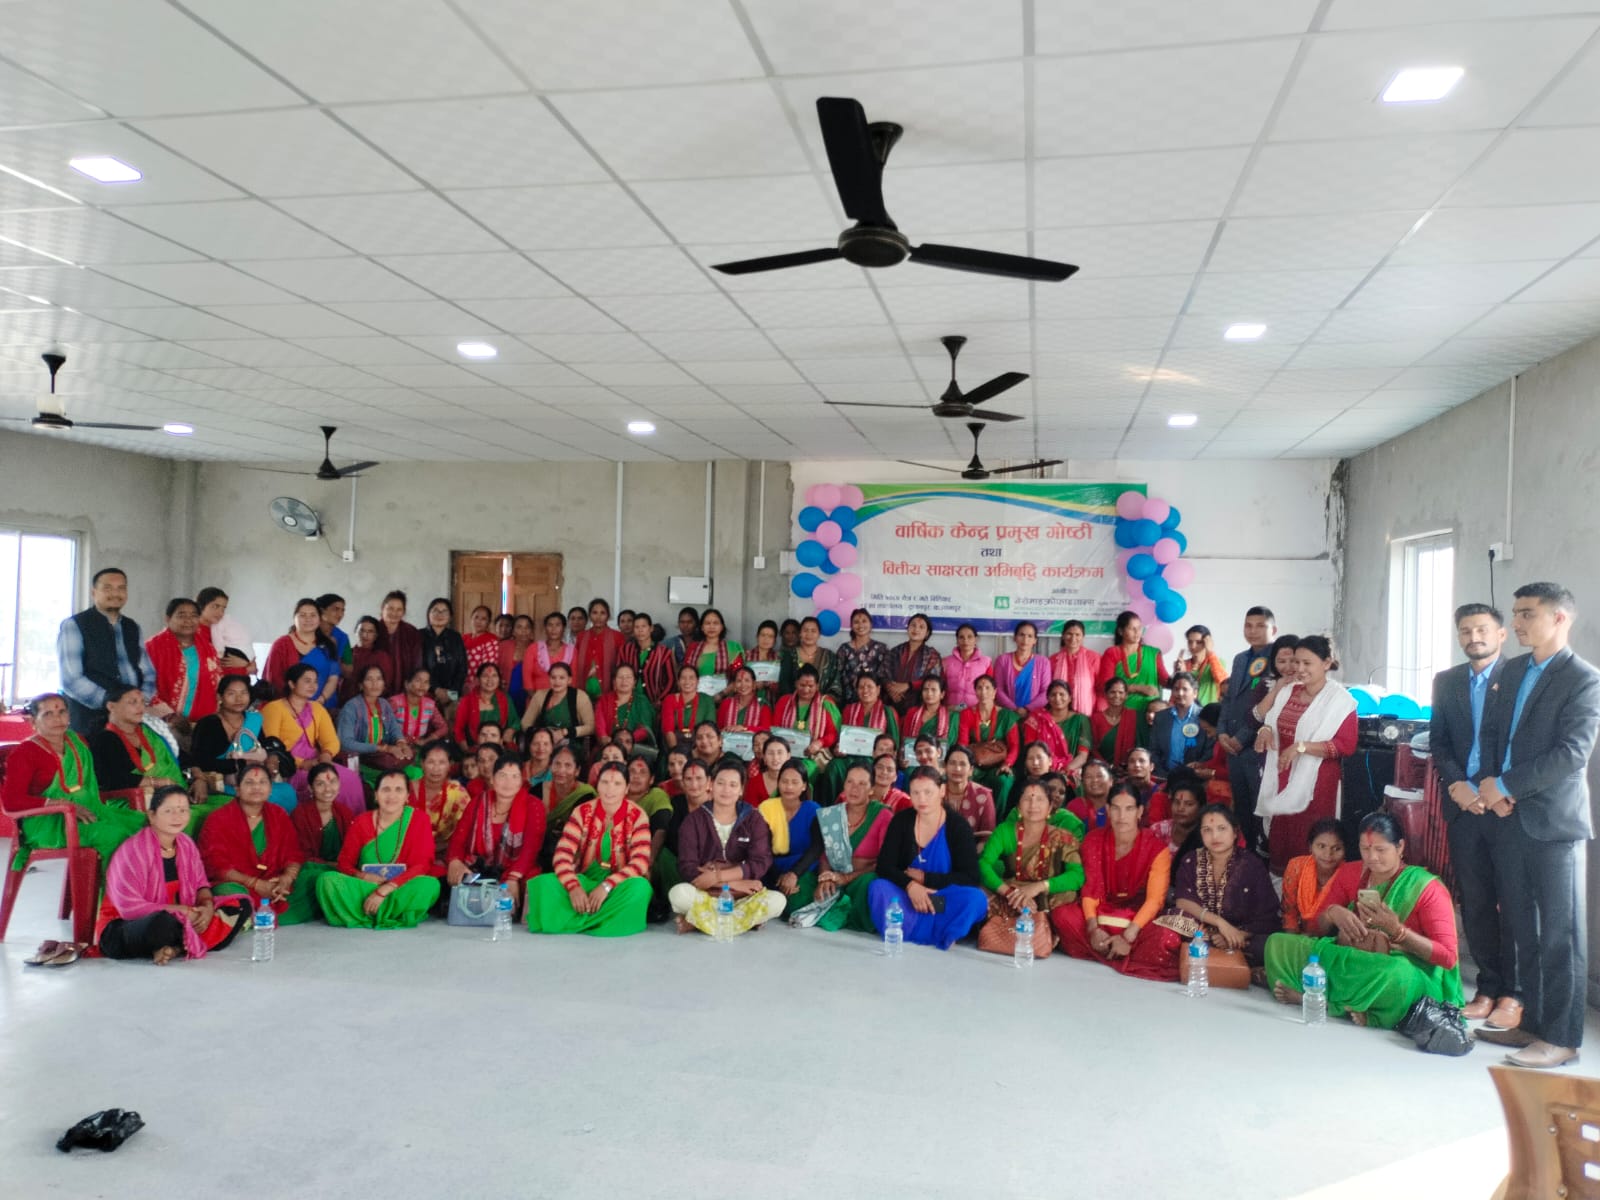 मेरो माइक्रो फाइनान्स कृष्णपुर शाखाको वार्षिक केन्द्र पमुख गोष्ठी तथा वित्तीय साक्षरता अभिवृद्धि कार्यक्रम